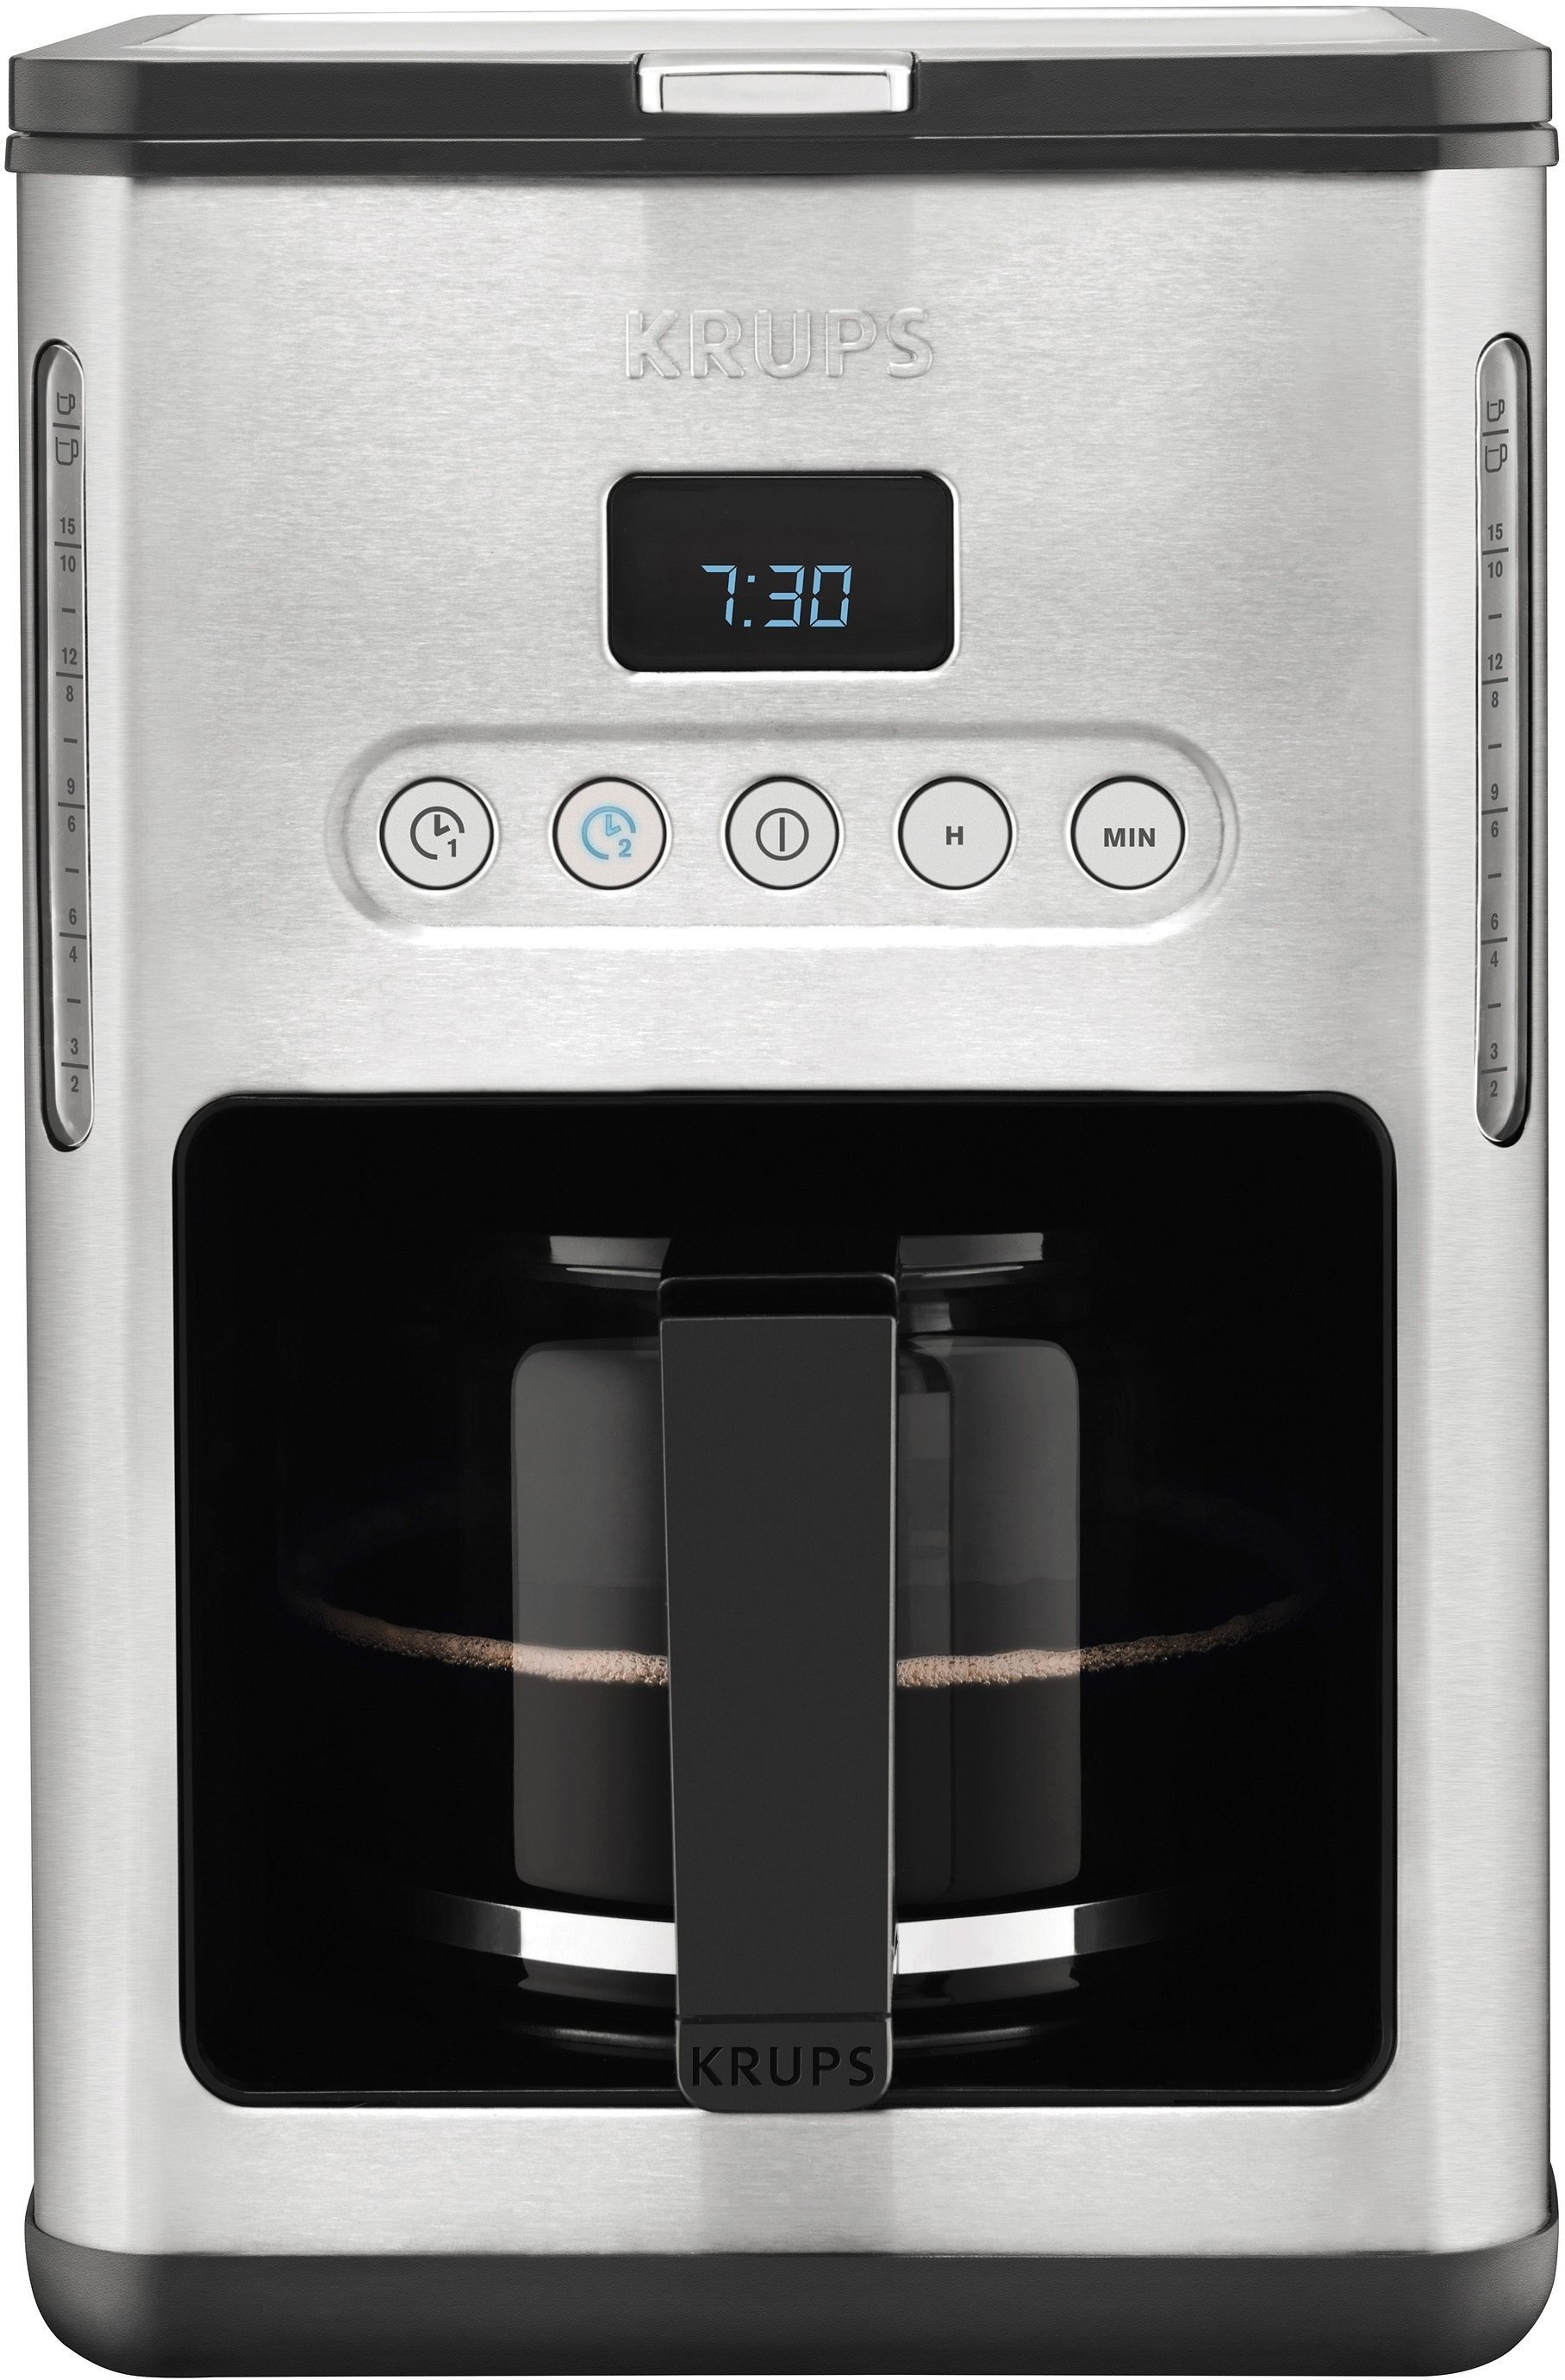 Krups 1,25l Keep Warm-Funktion, mit KM442D, Programmierbare, 1x4, Papierfilter hochwertige Kaffeekanne, Filter-Kaffeemaschine Filterkaffeemaschine